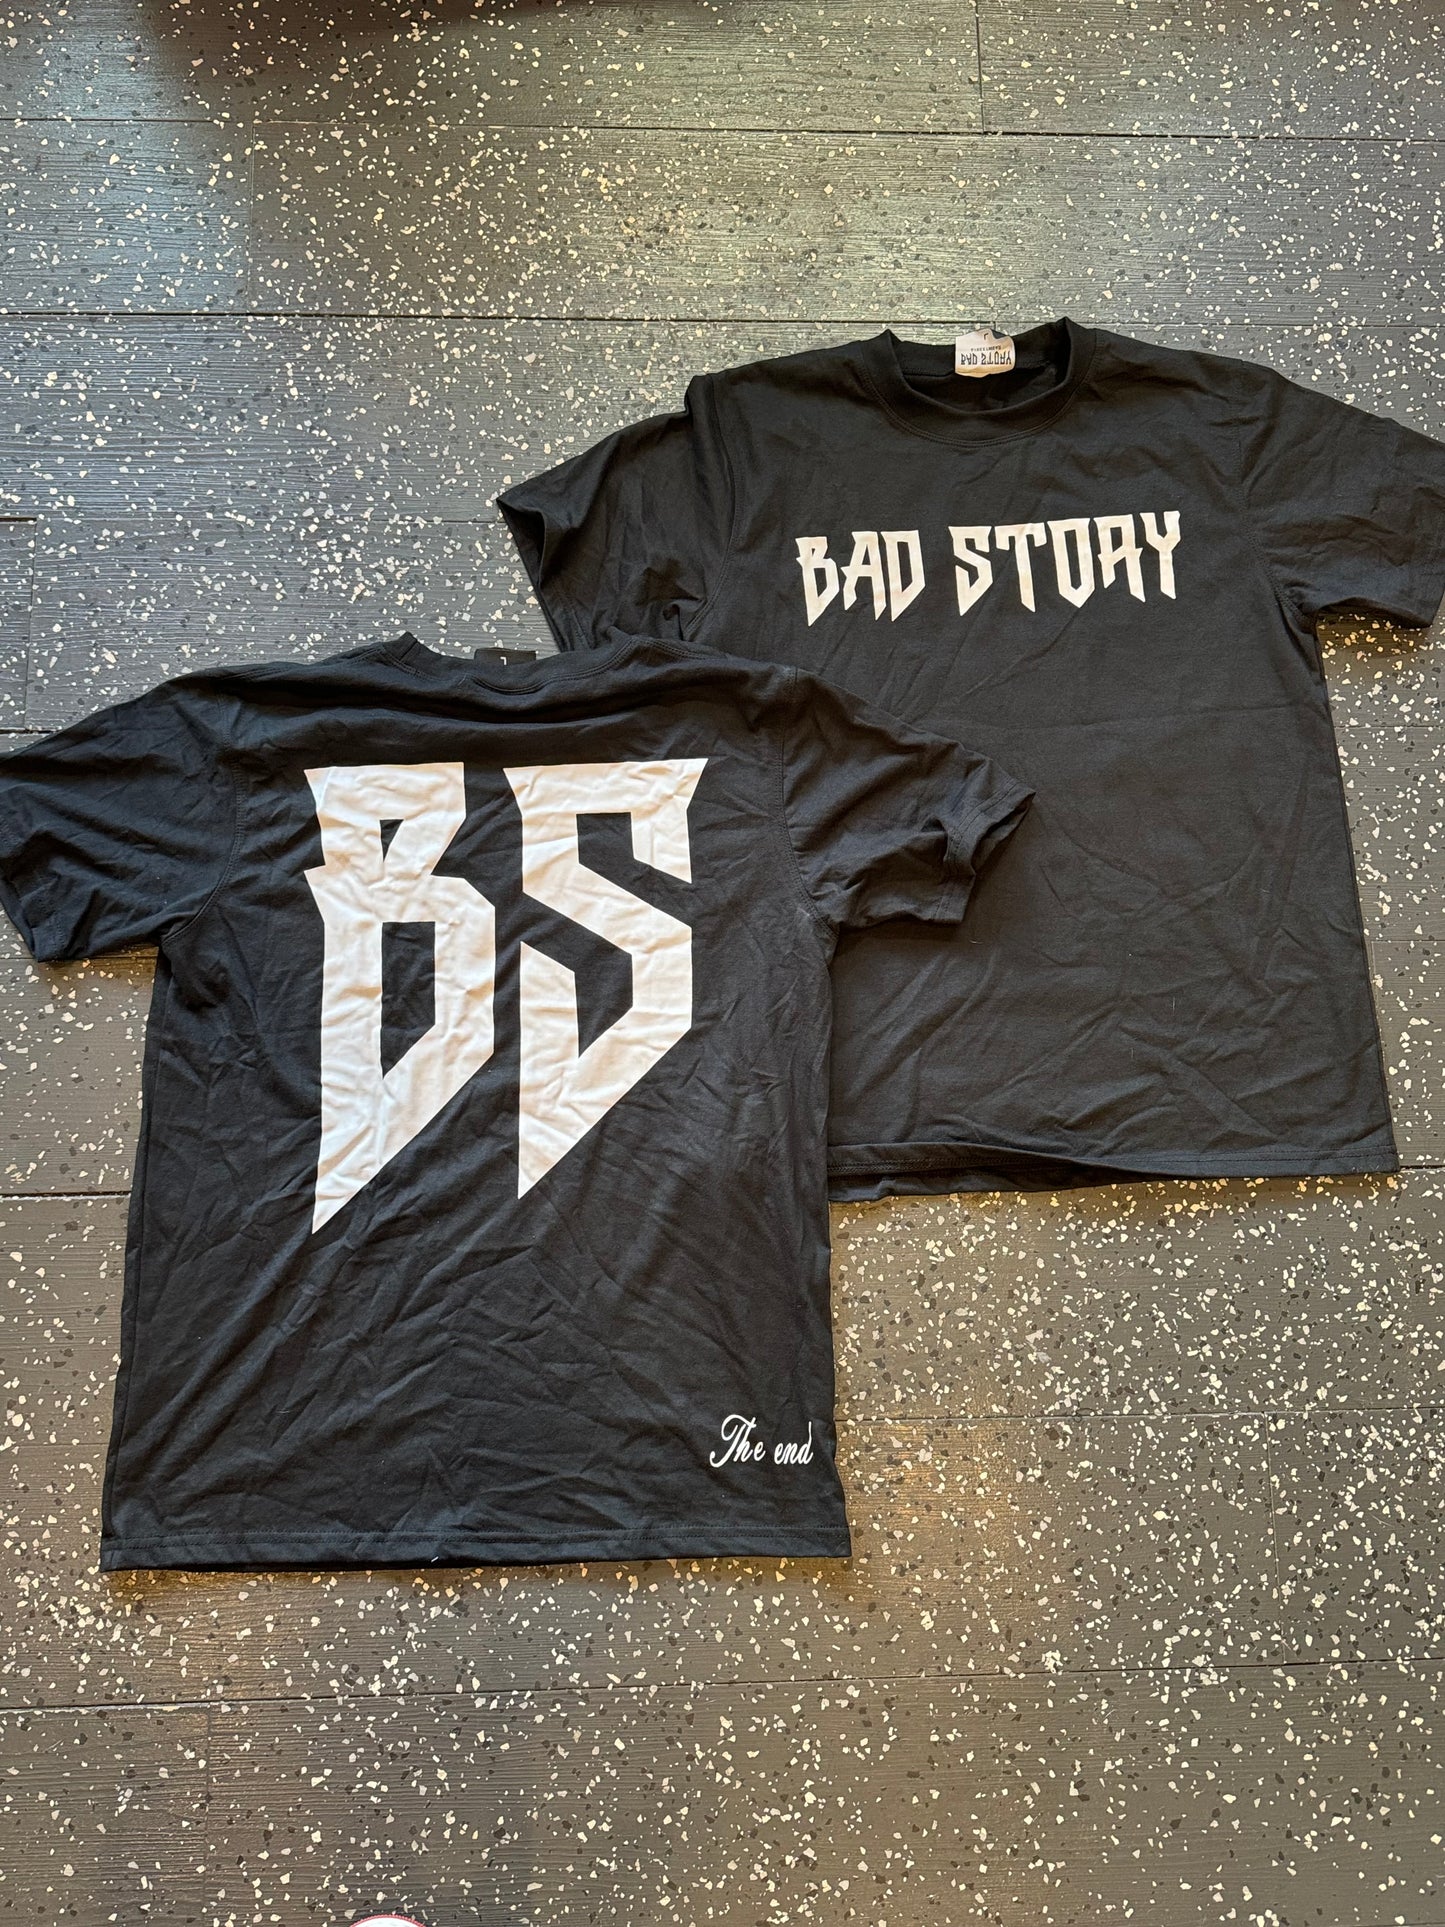 Black bad story shirt